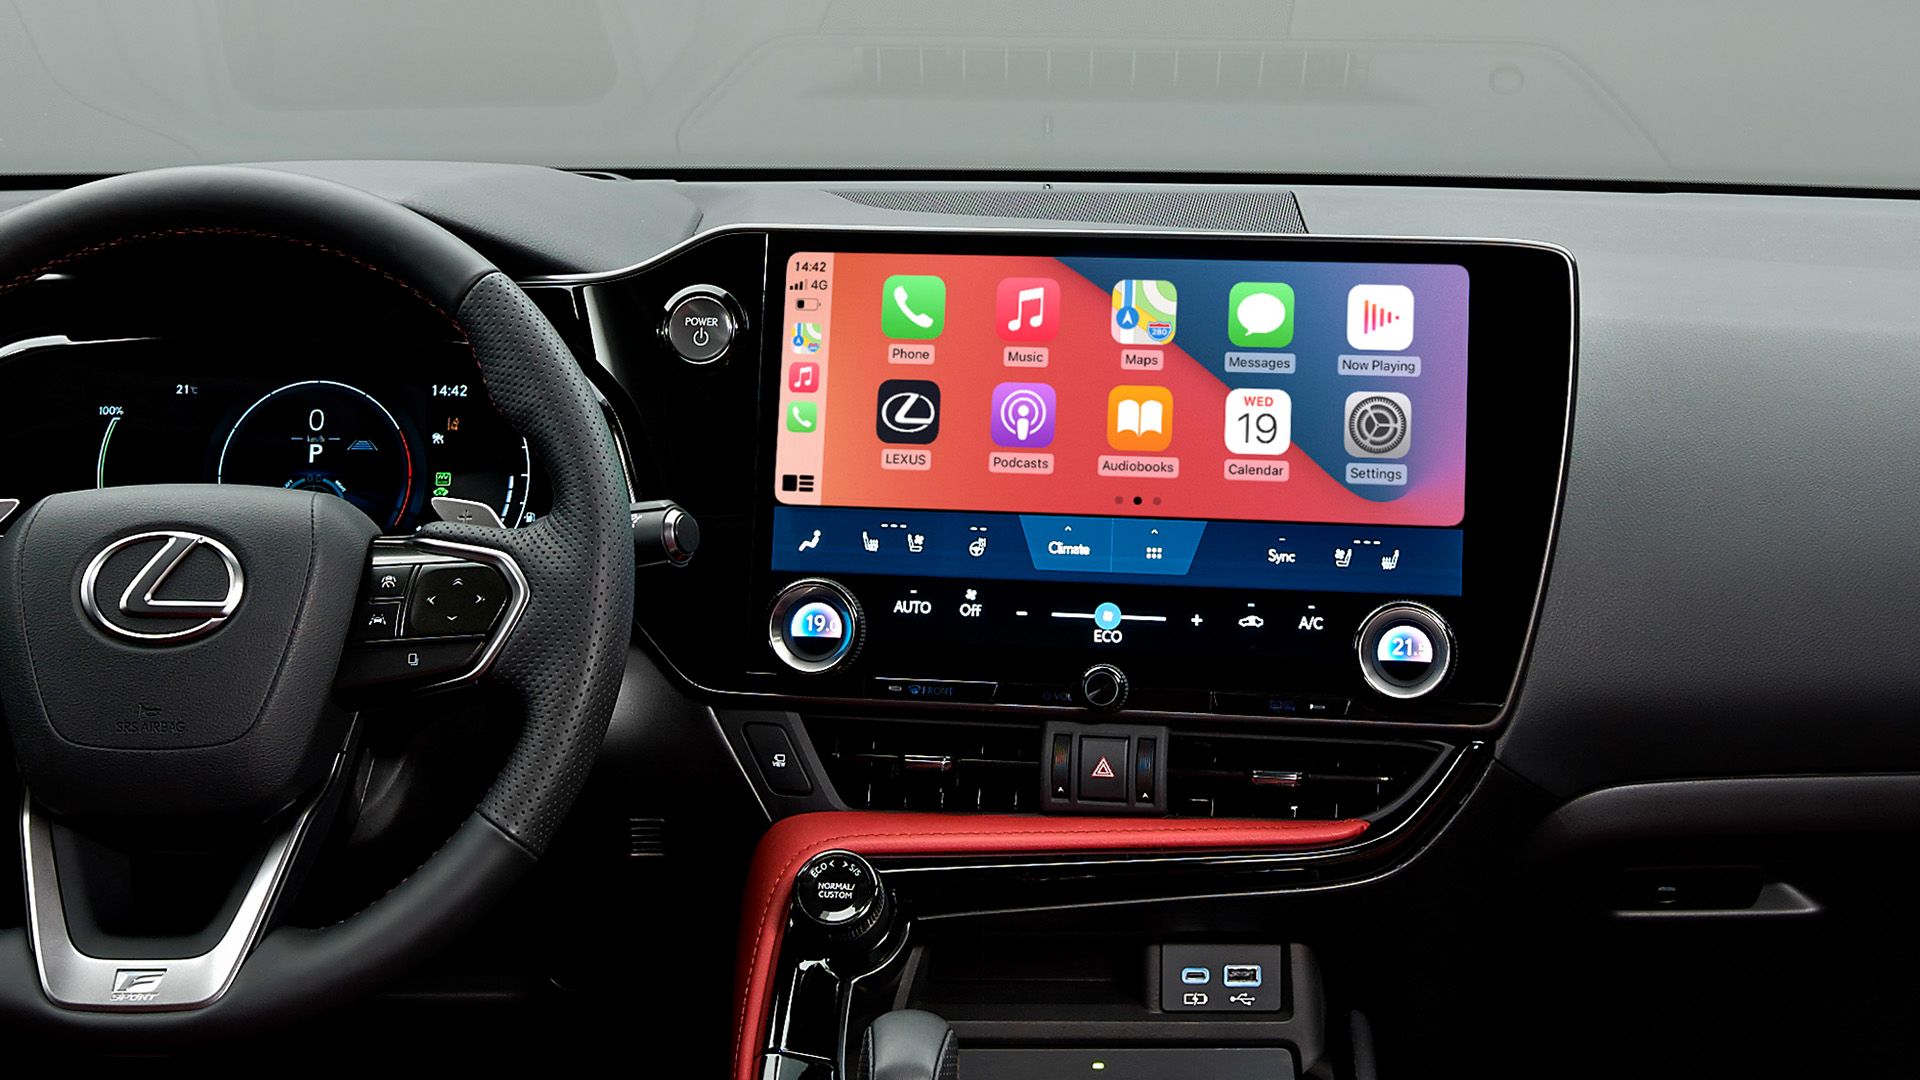 The Lexus multimedia system